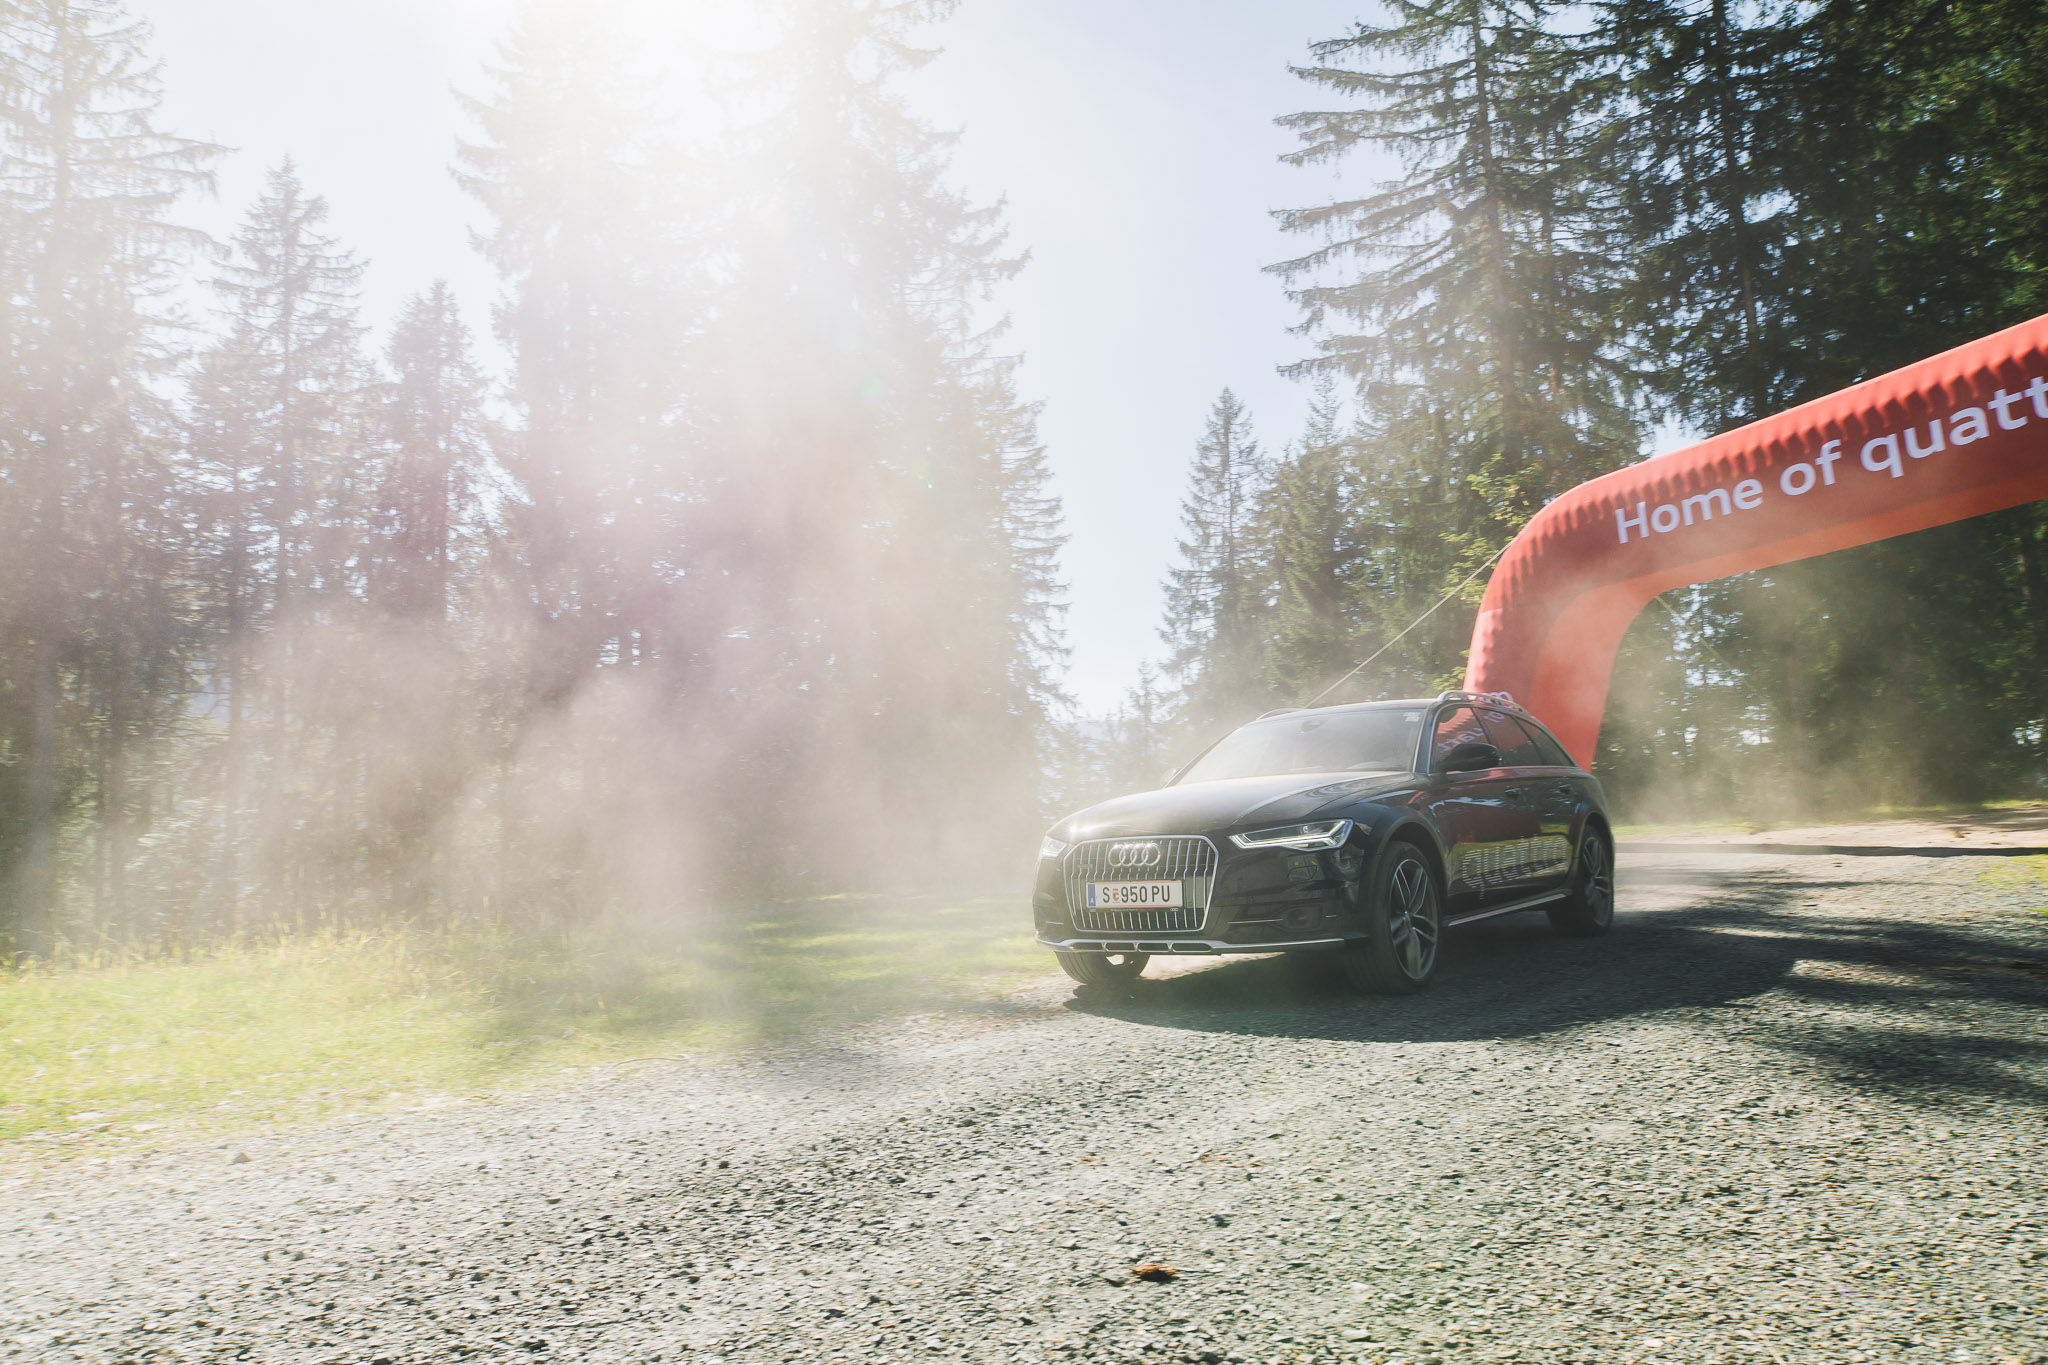 Audi tour experience – Alpentour R8